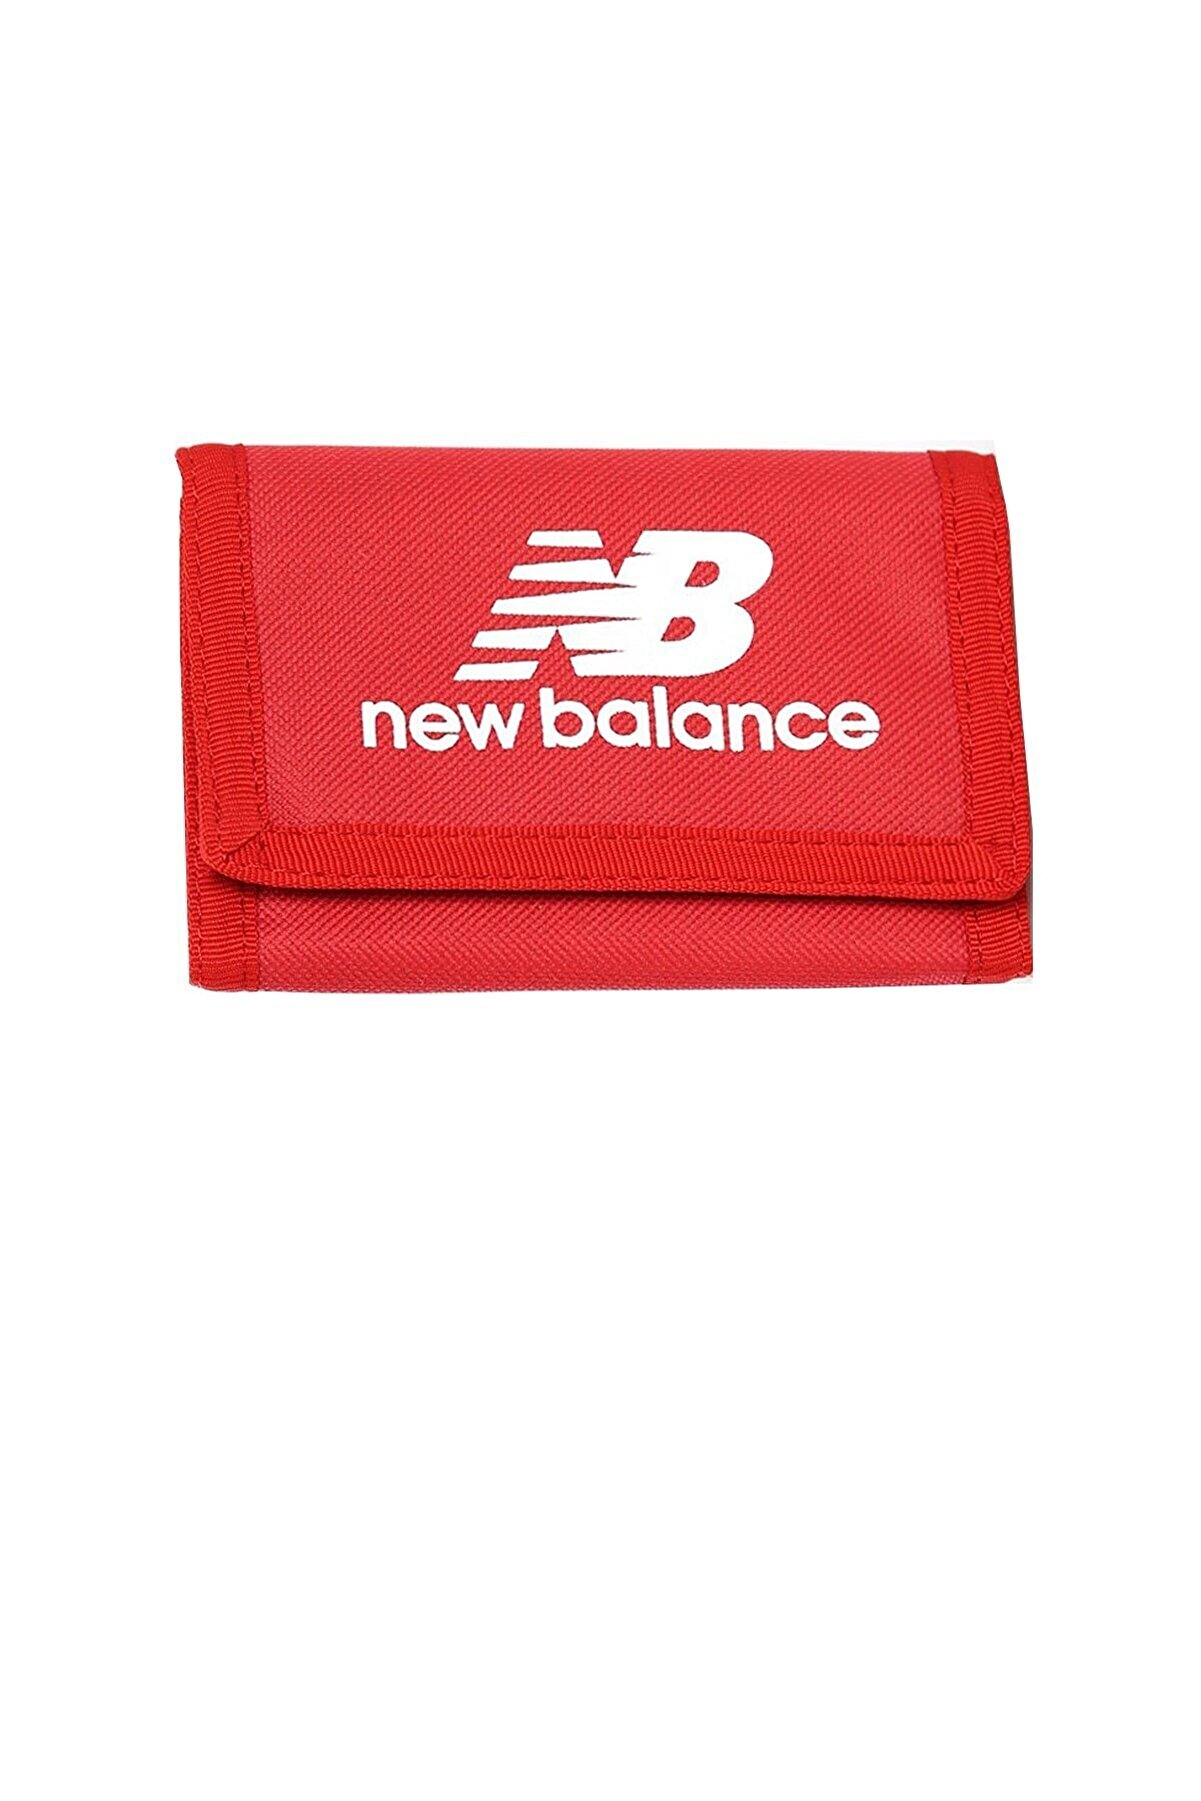 New Balance Unisex Kırmızı Cüzdan Nbbp240- Chr